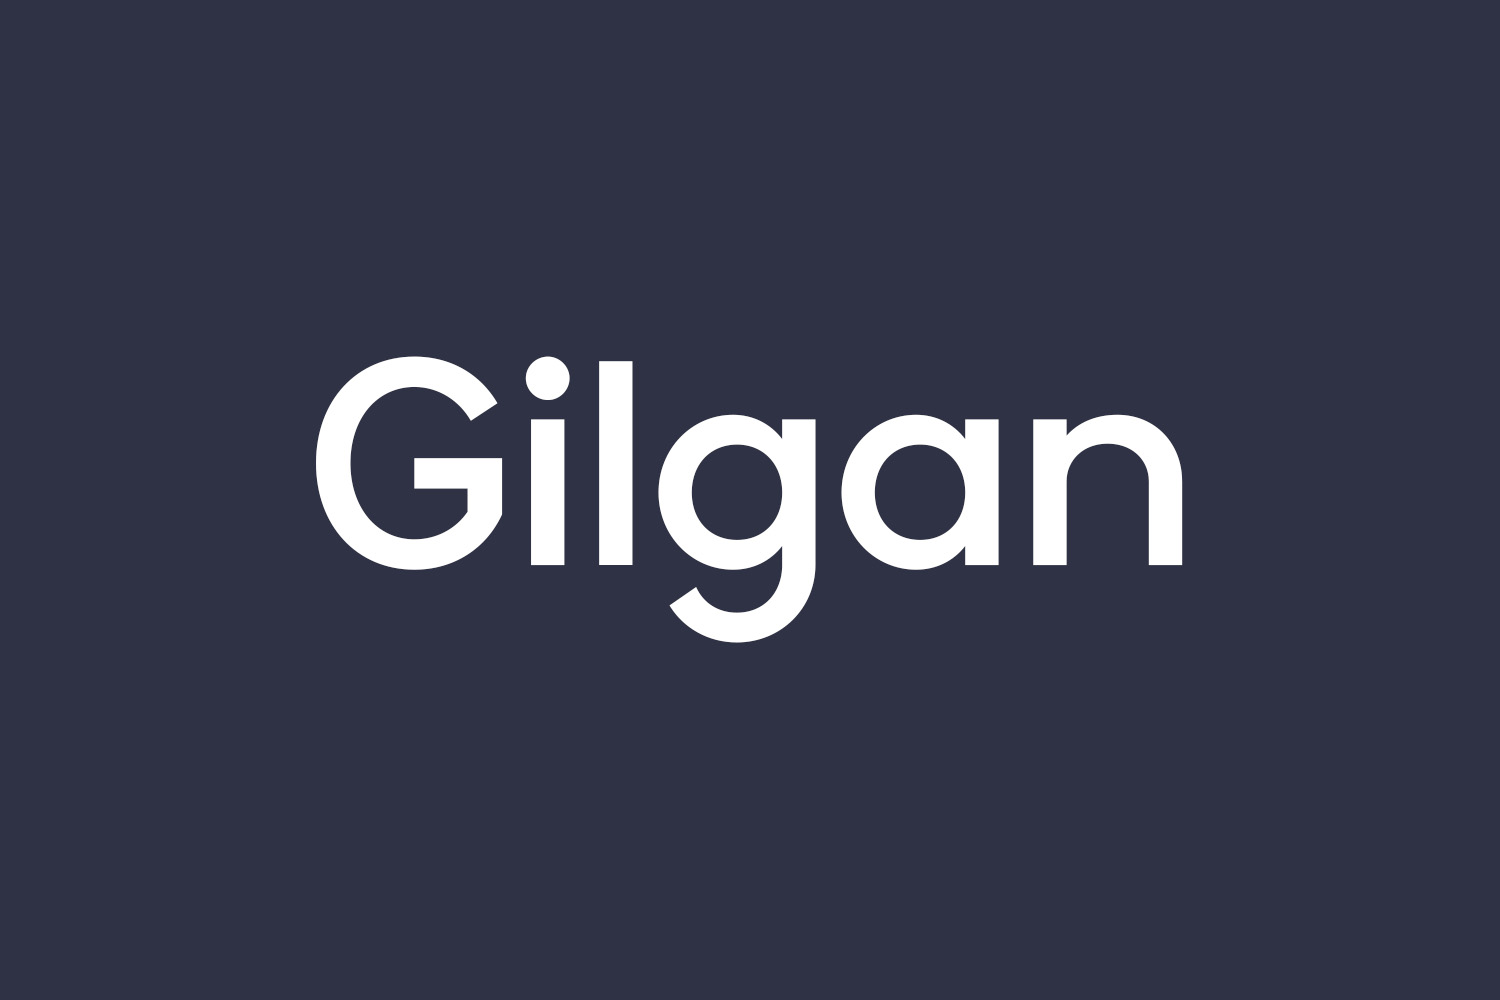 Gilgan Free Font